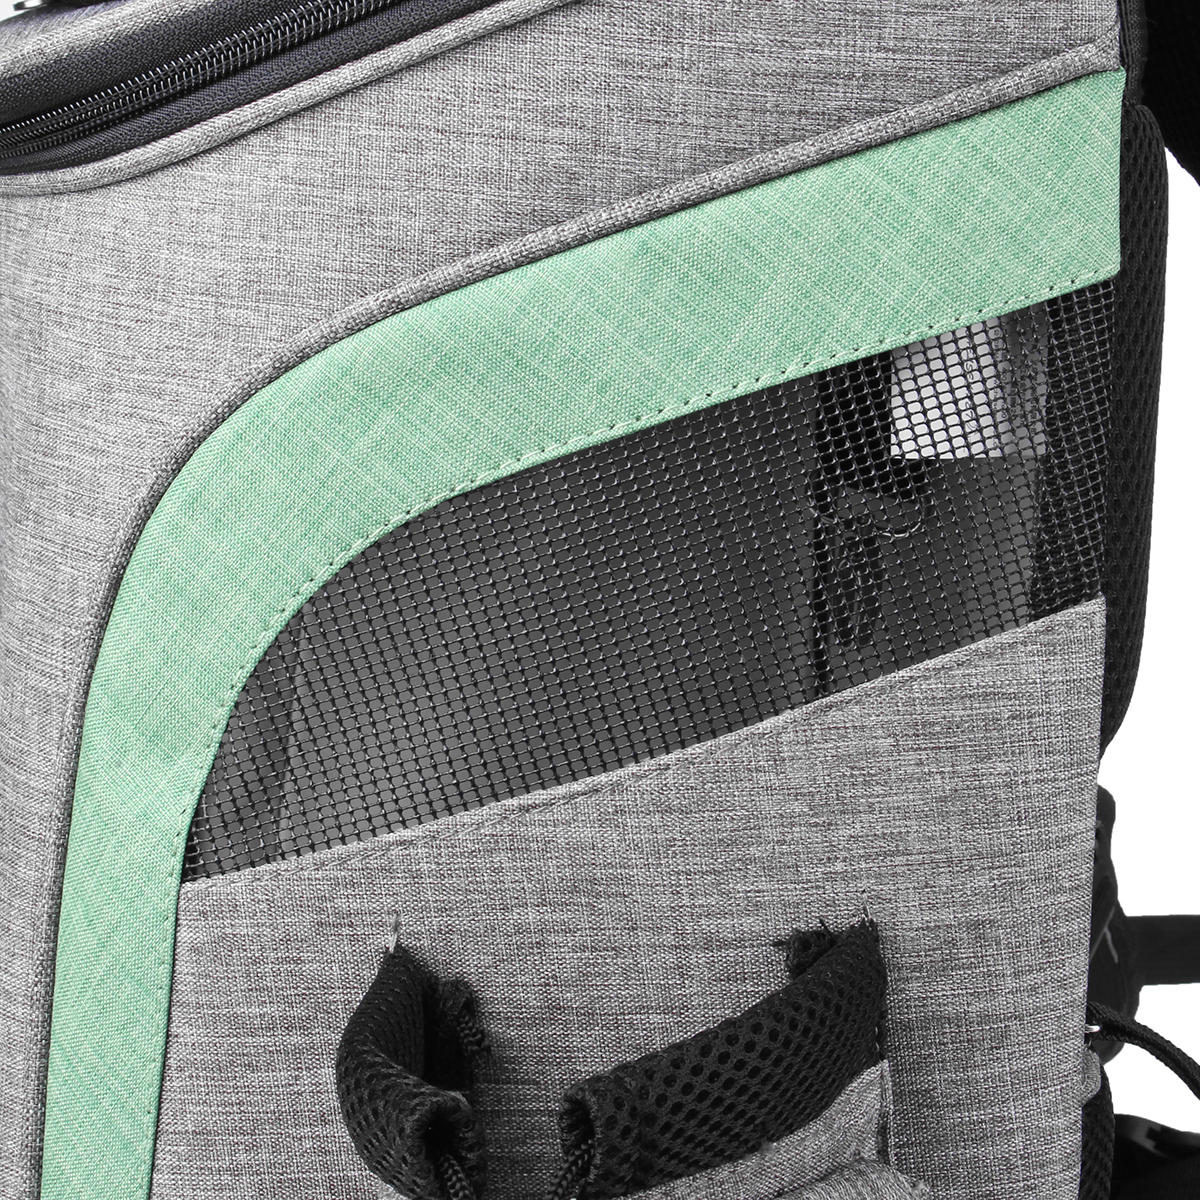 Portable Breathable Mesh Head Dog Cat Carrier Backpack Double Shoulder Bag Pet Accessories